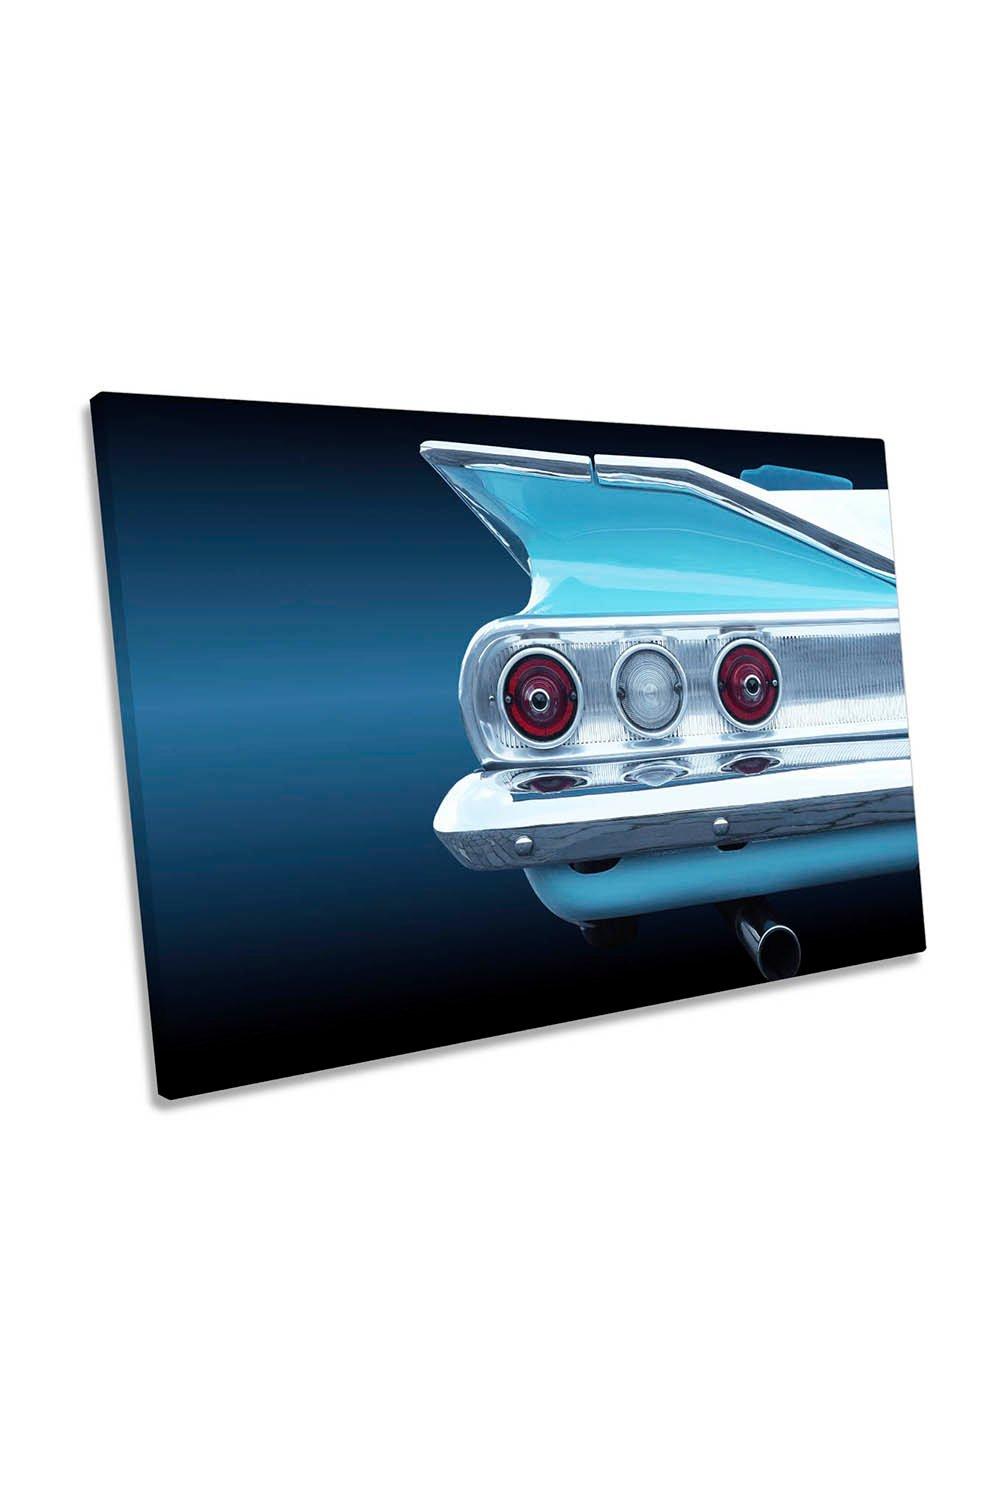 US Classic Car Impala Convertible 1960 Canvas Wall Art Picture Print